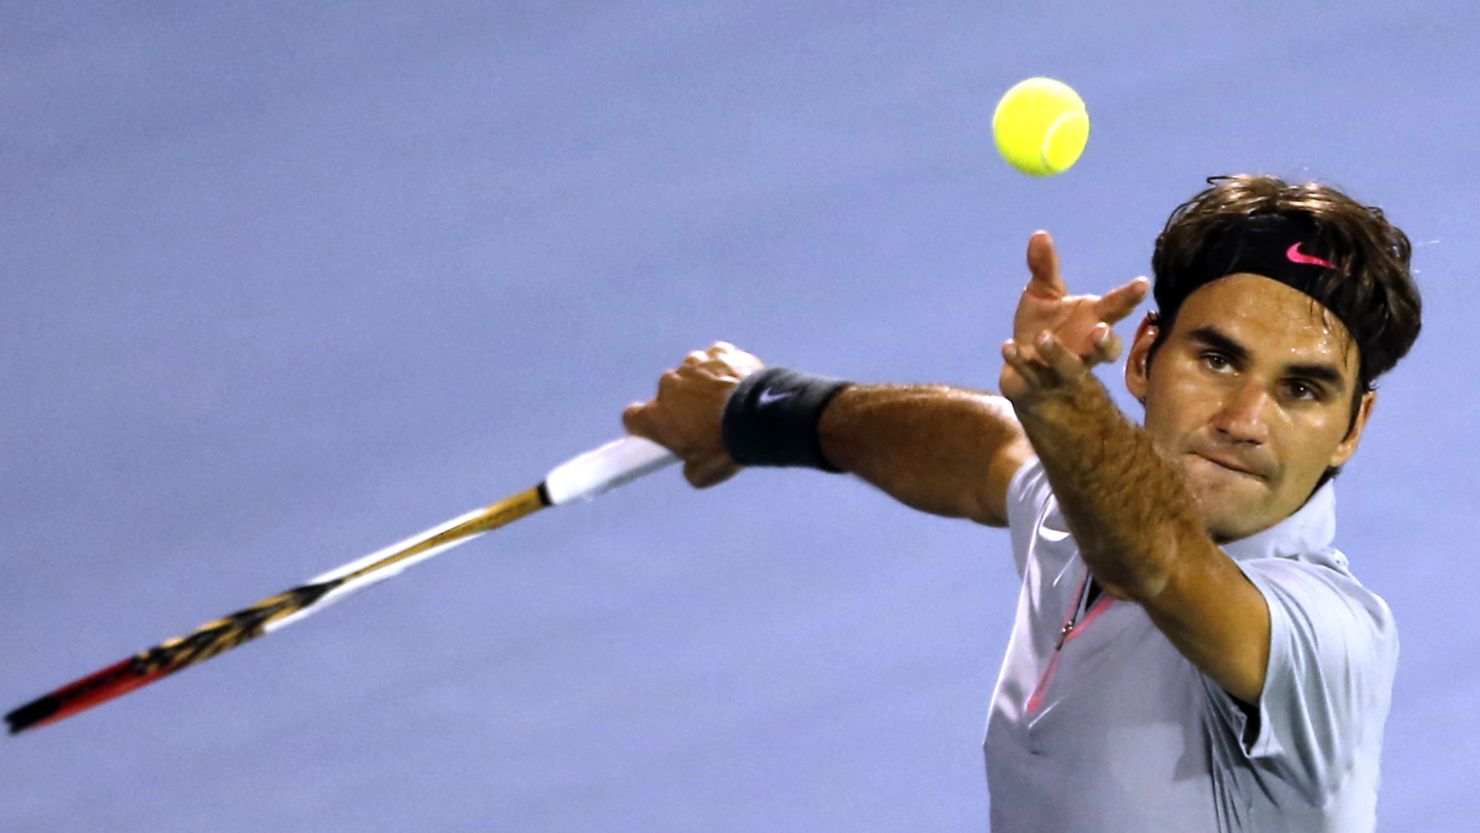 Switzerland's Roger Federer serves against Malek Jaziri as he eyes his sixth Dubai Tennis Championships title